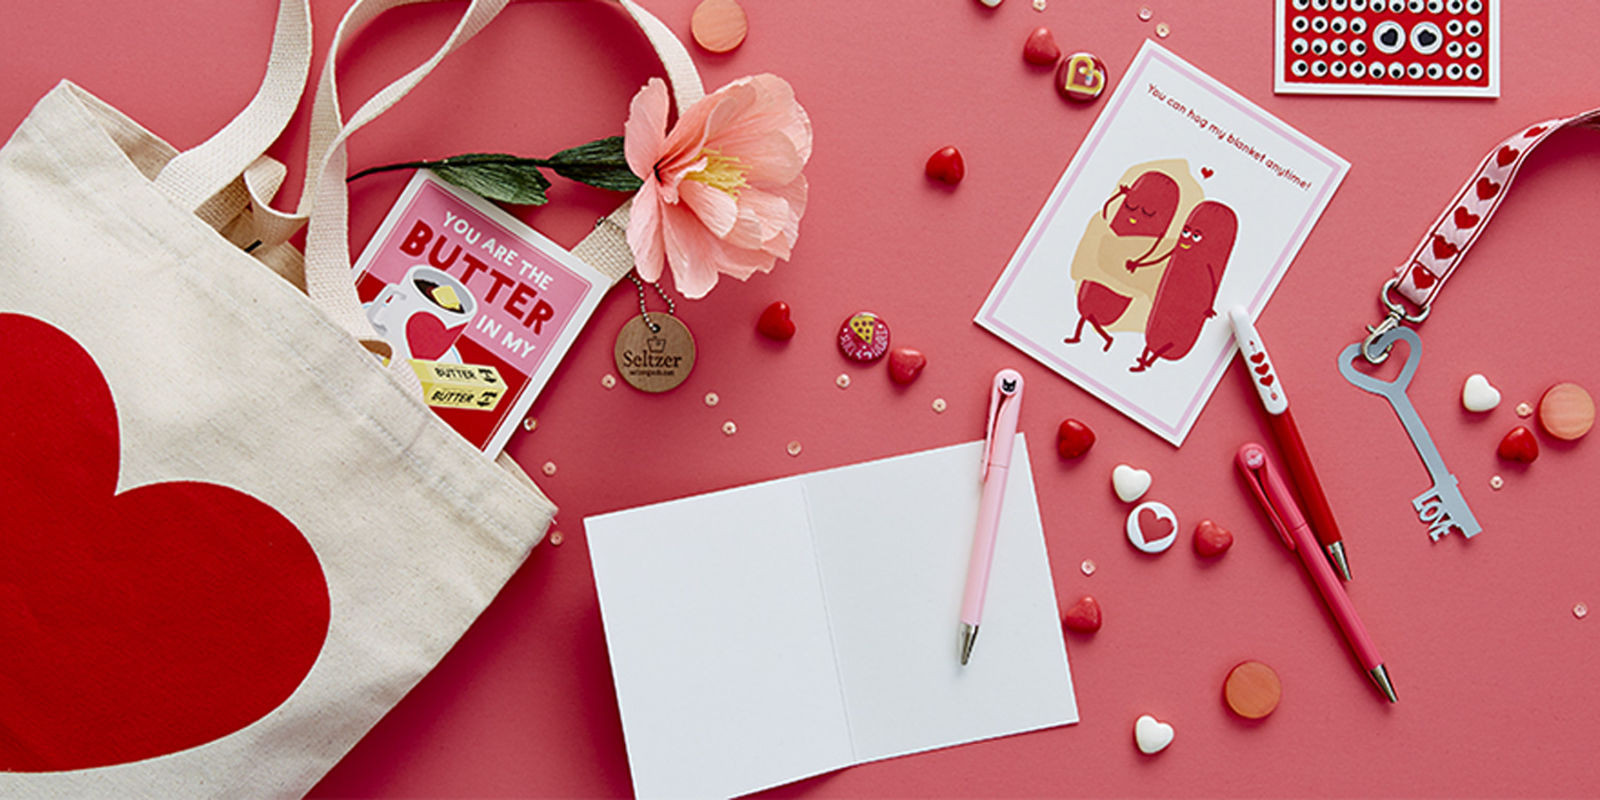 Romantic Valentines Day Gift Ideas
 2017 Valentine s Day Gift Ideas for Him and Her Romantic